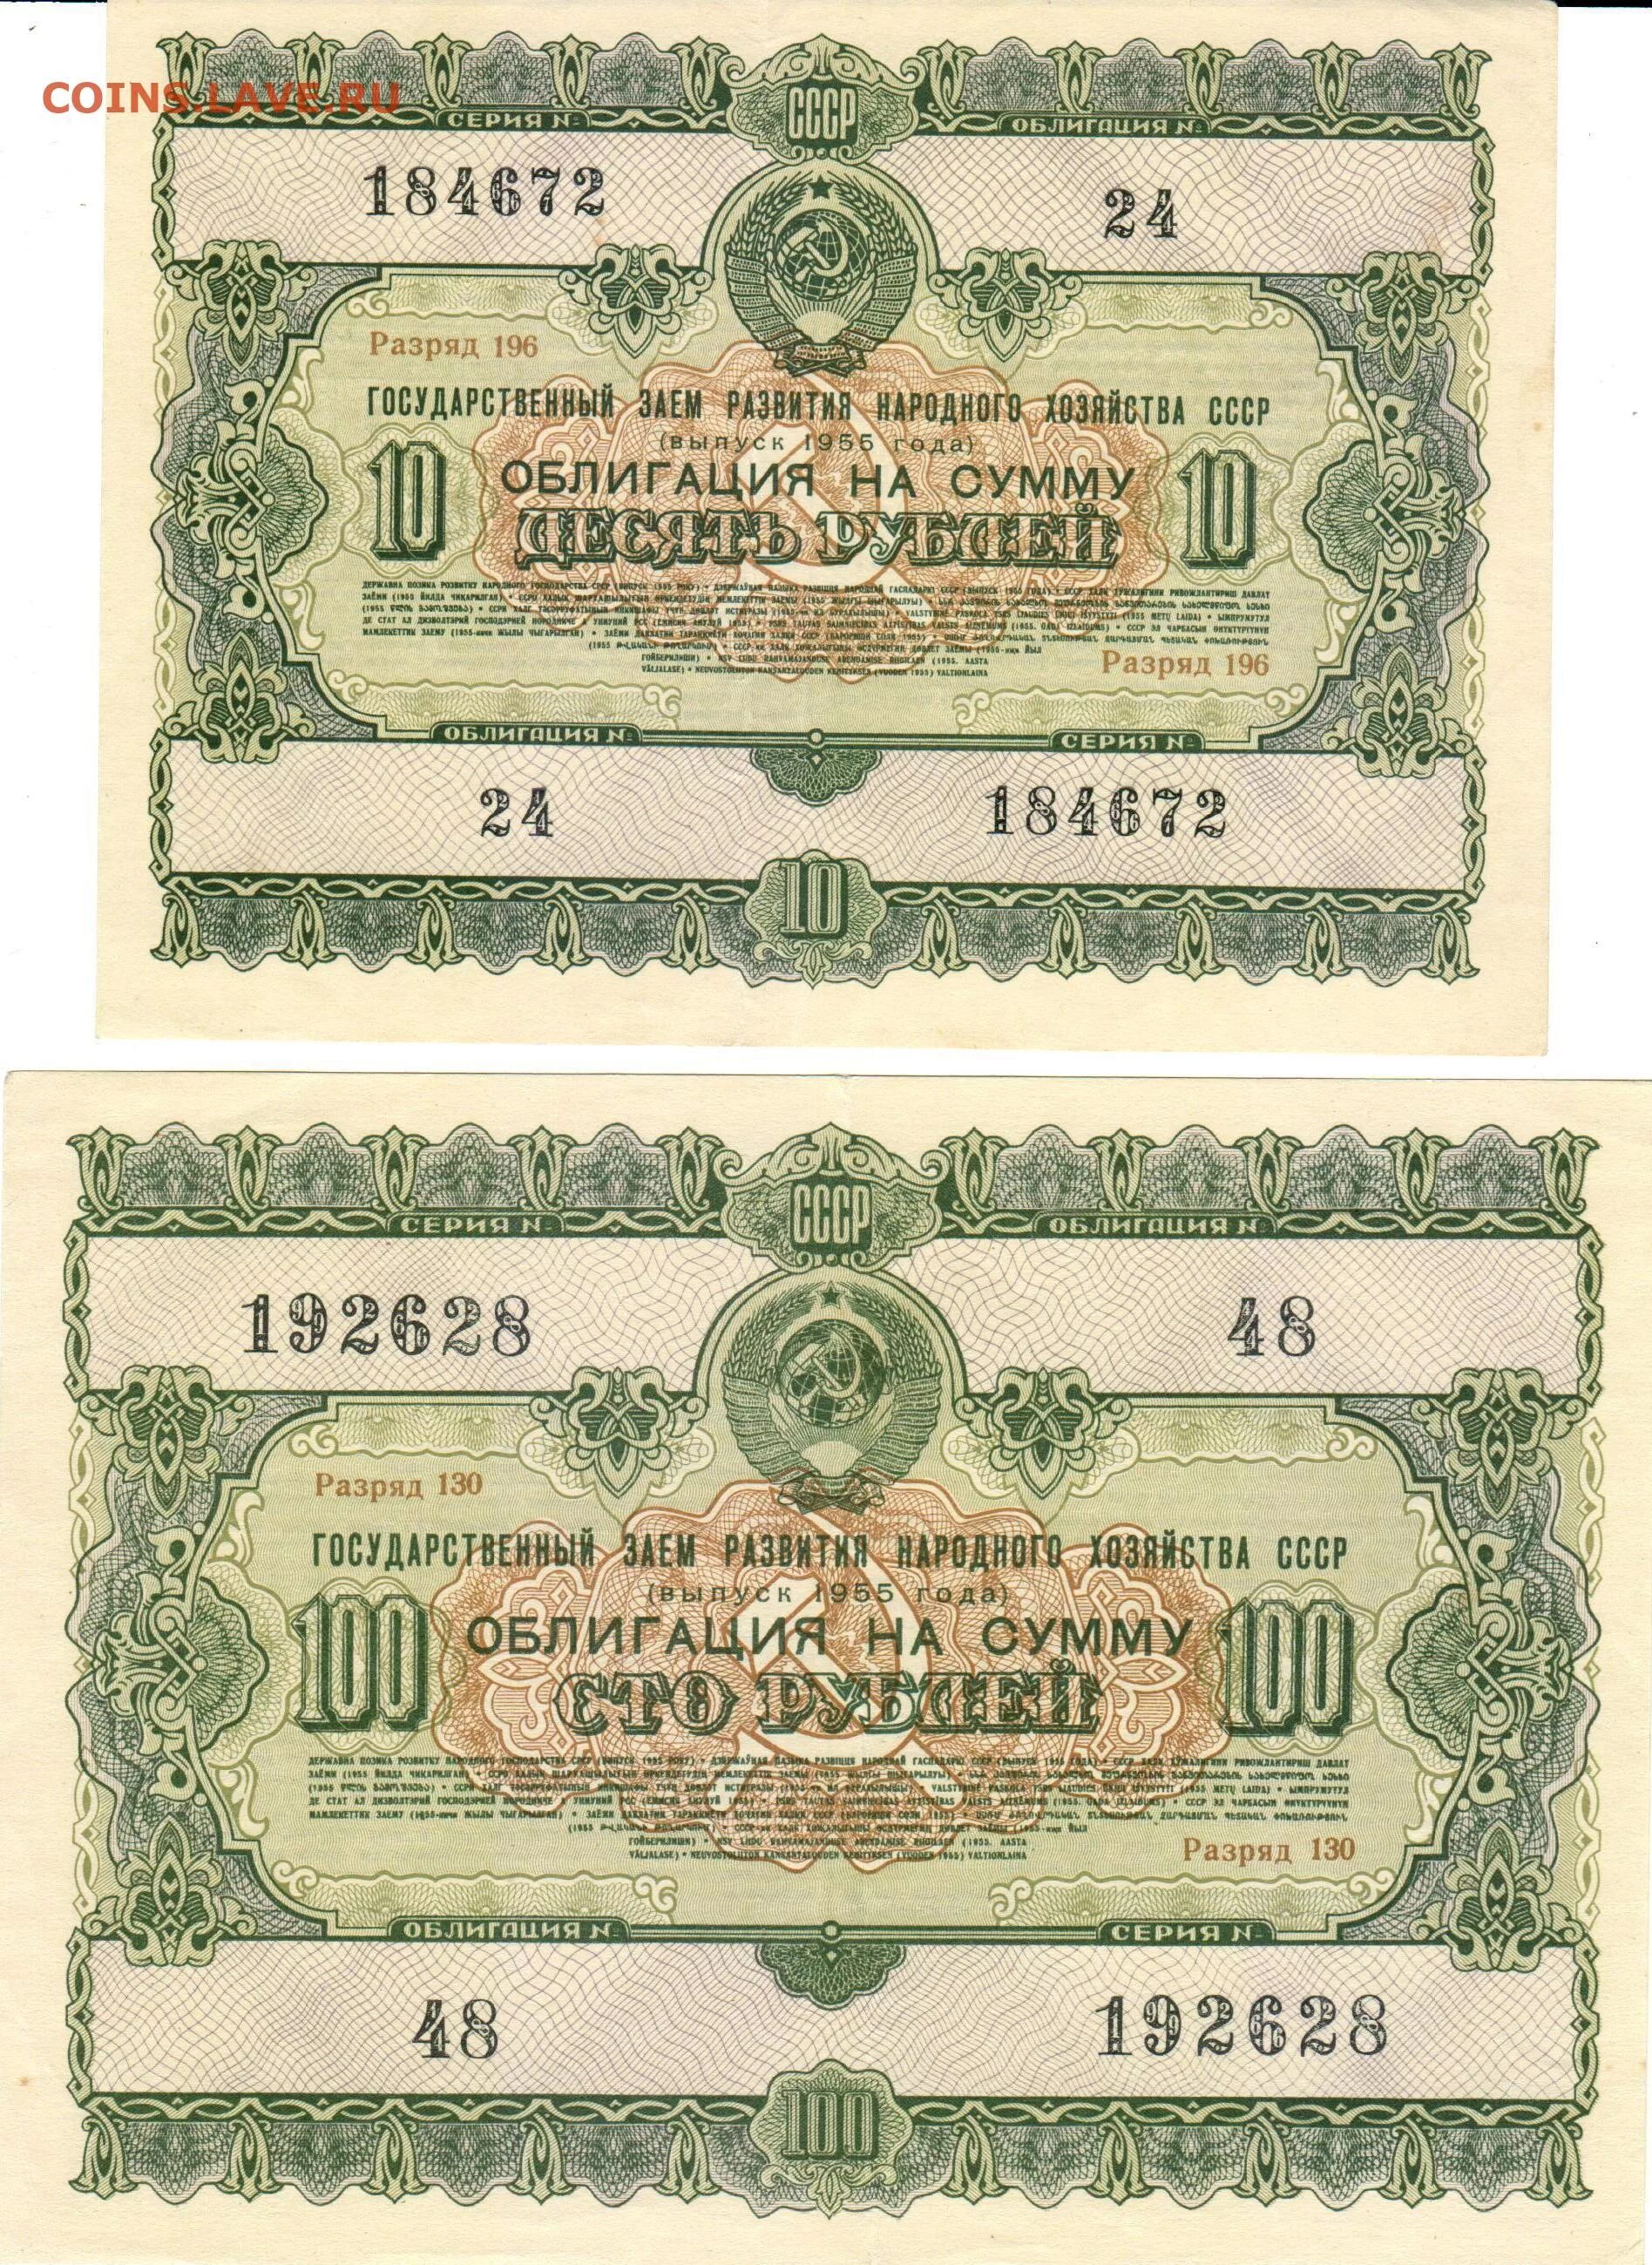 Банкнота купюра облигация. Облигации 1955. Банкноты это ценные бумаги. Ассигнации и облигации. Облигация 100 рублей 1947.